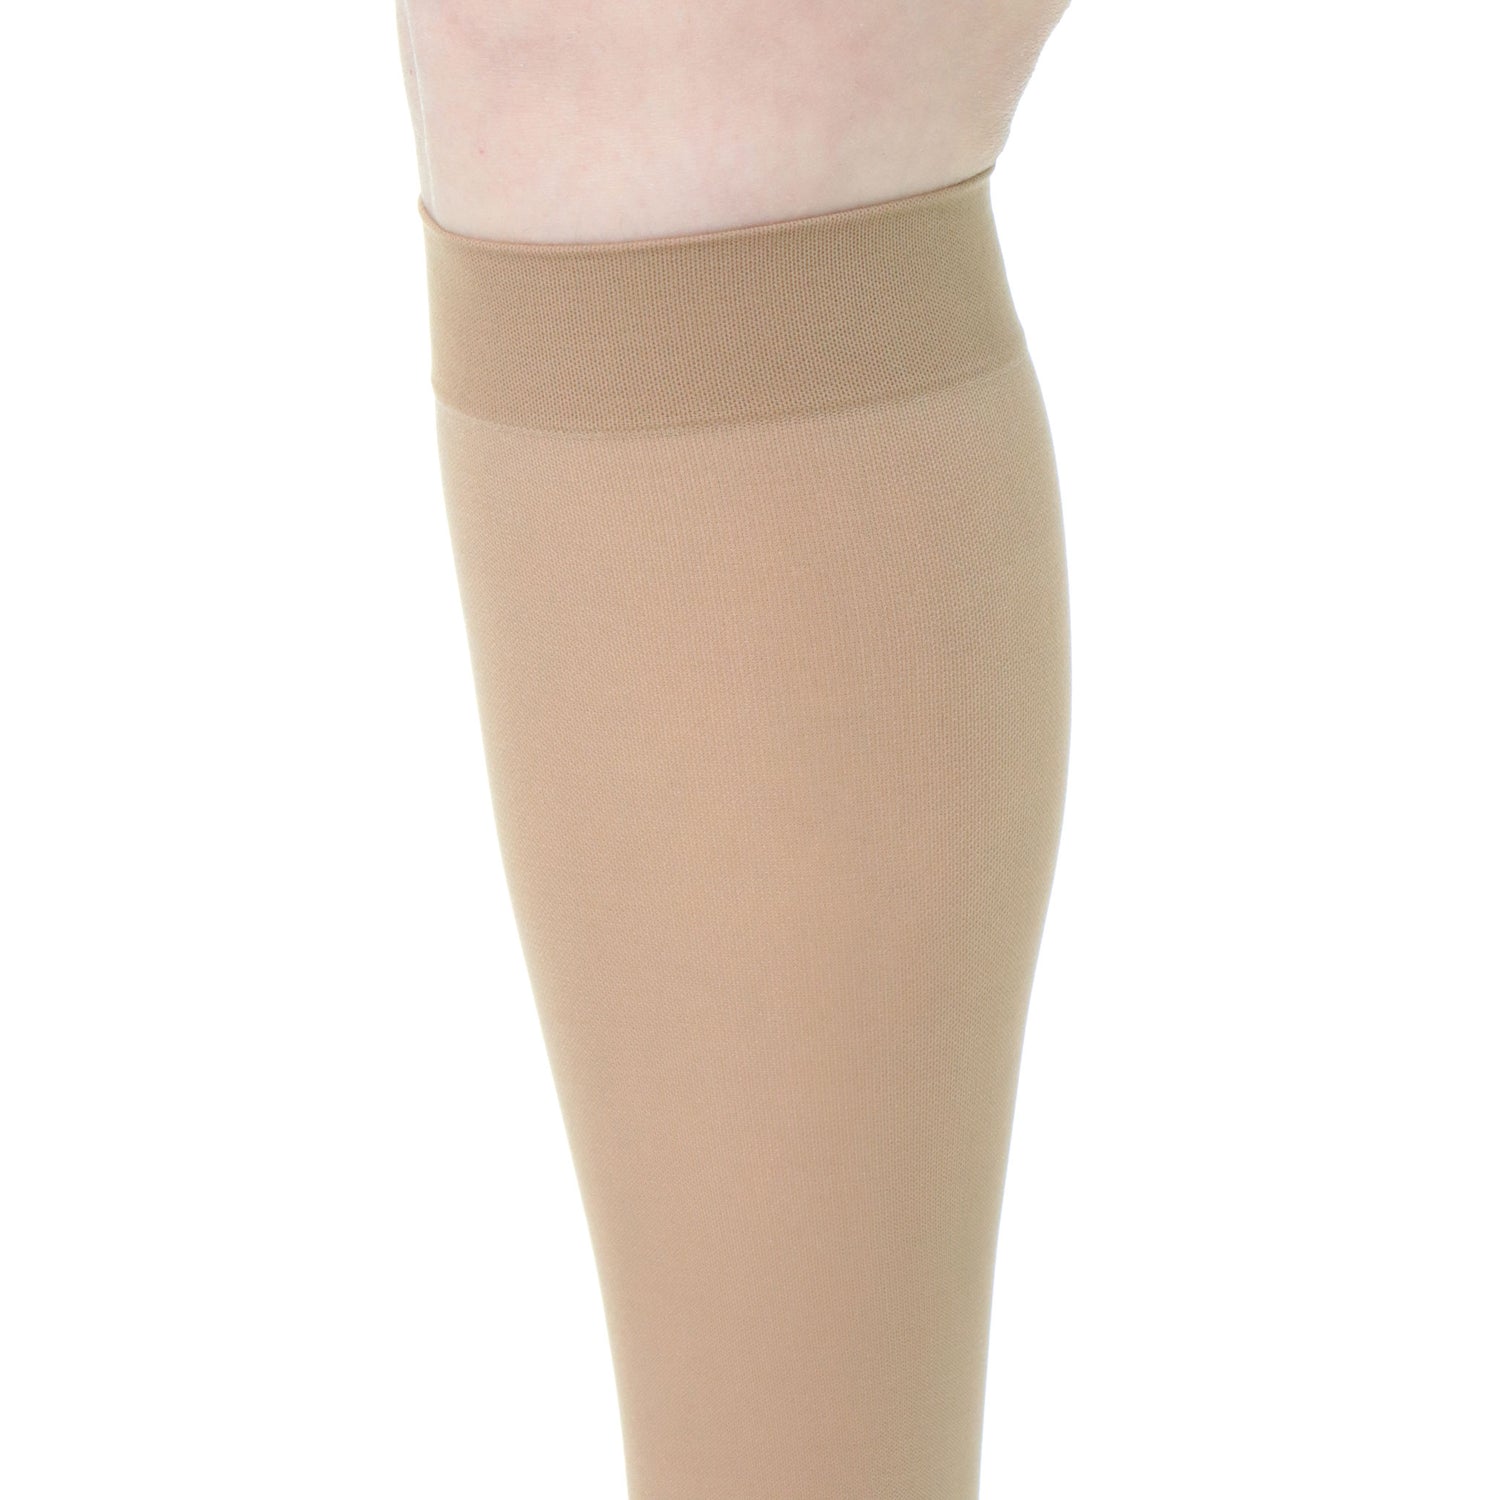 Graduated Compression Stockings Women 20-30 mmHg Medium Support